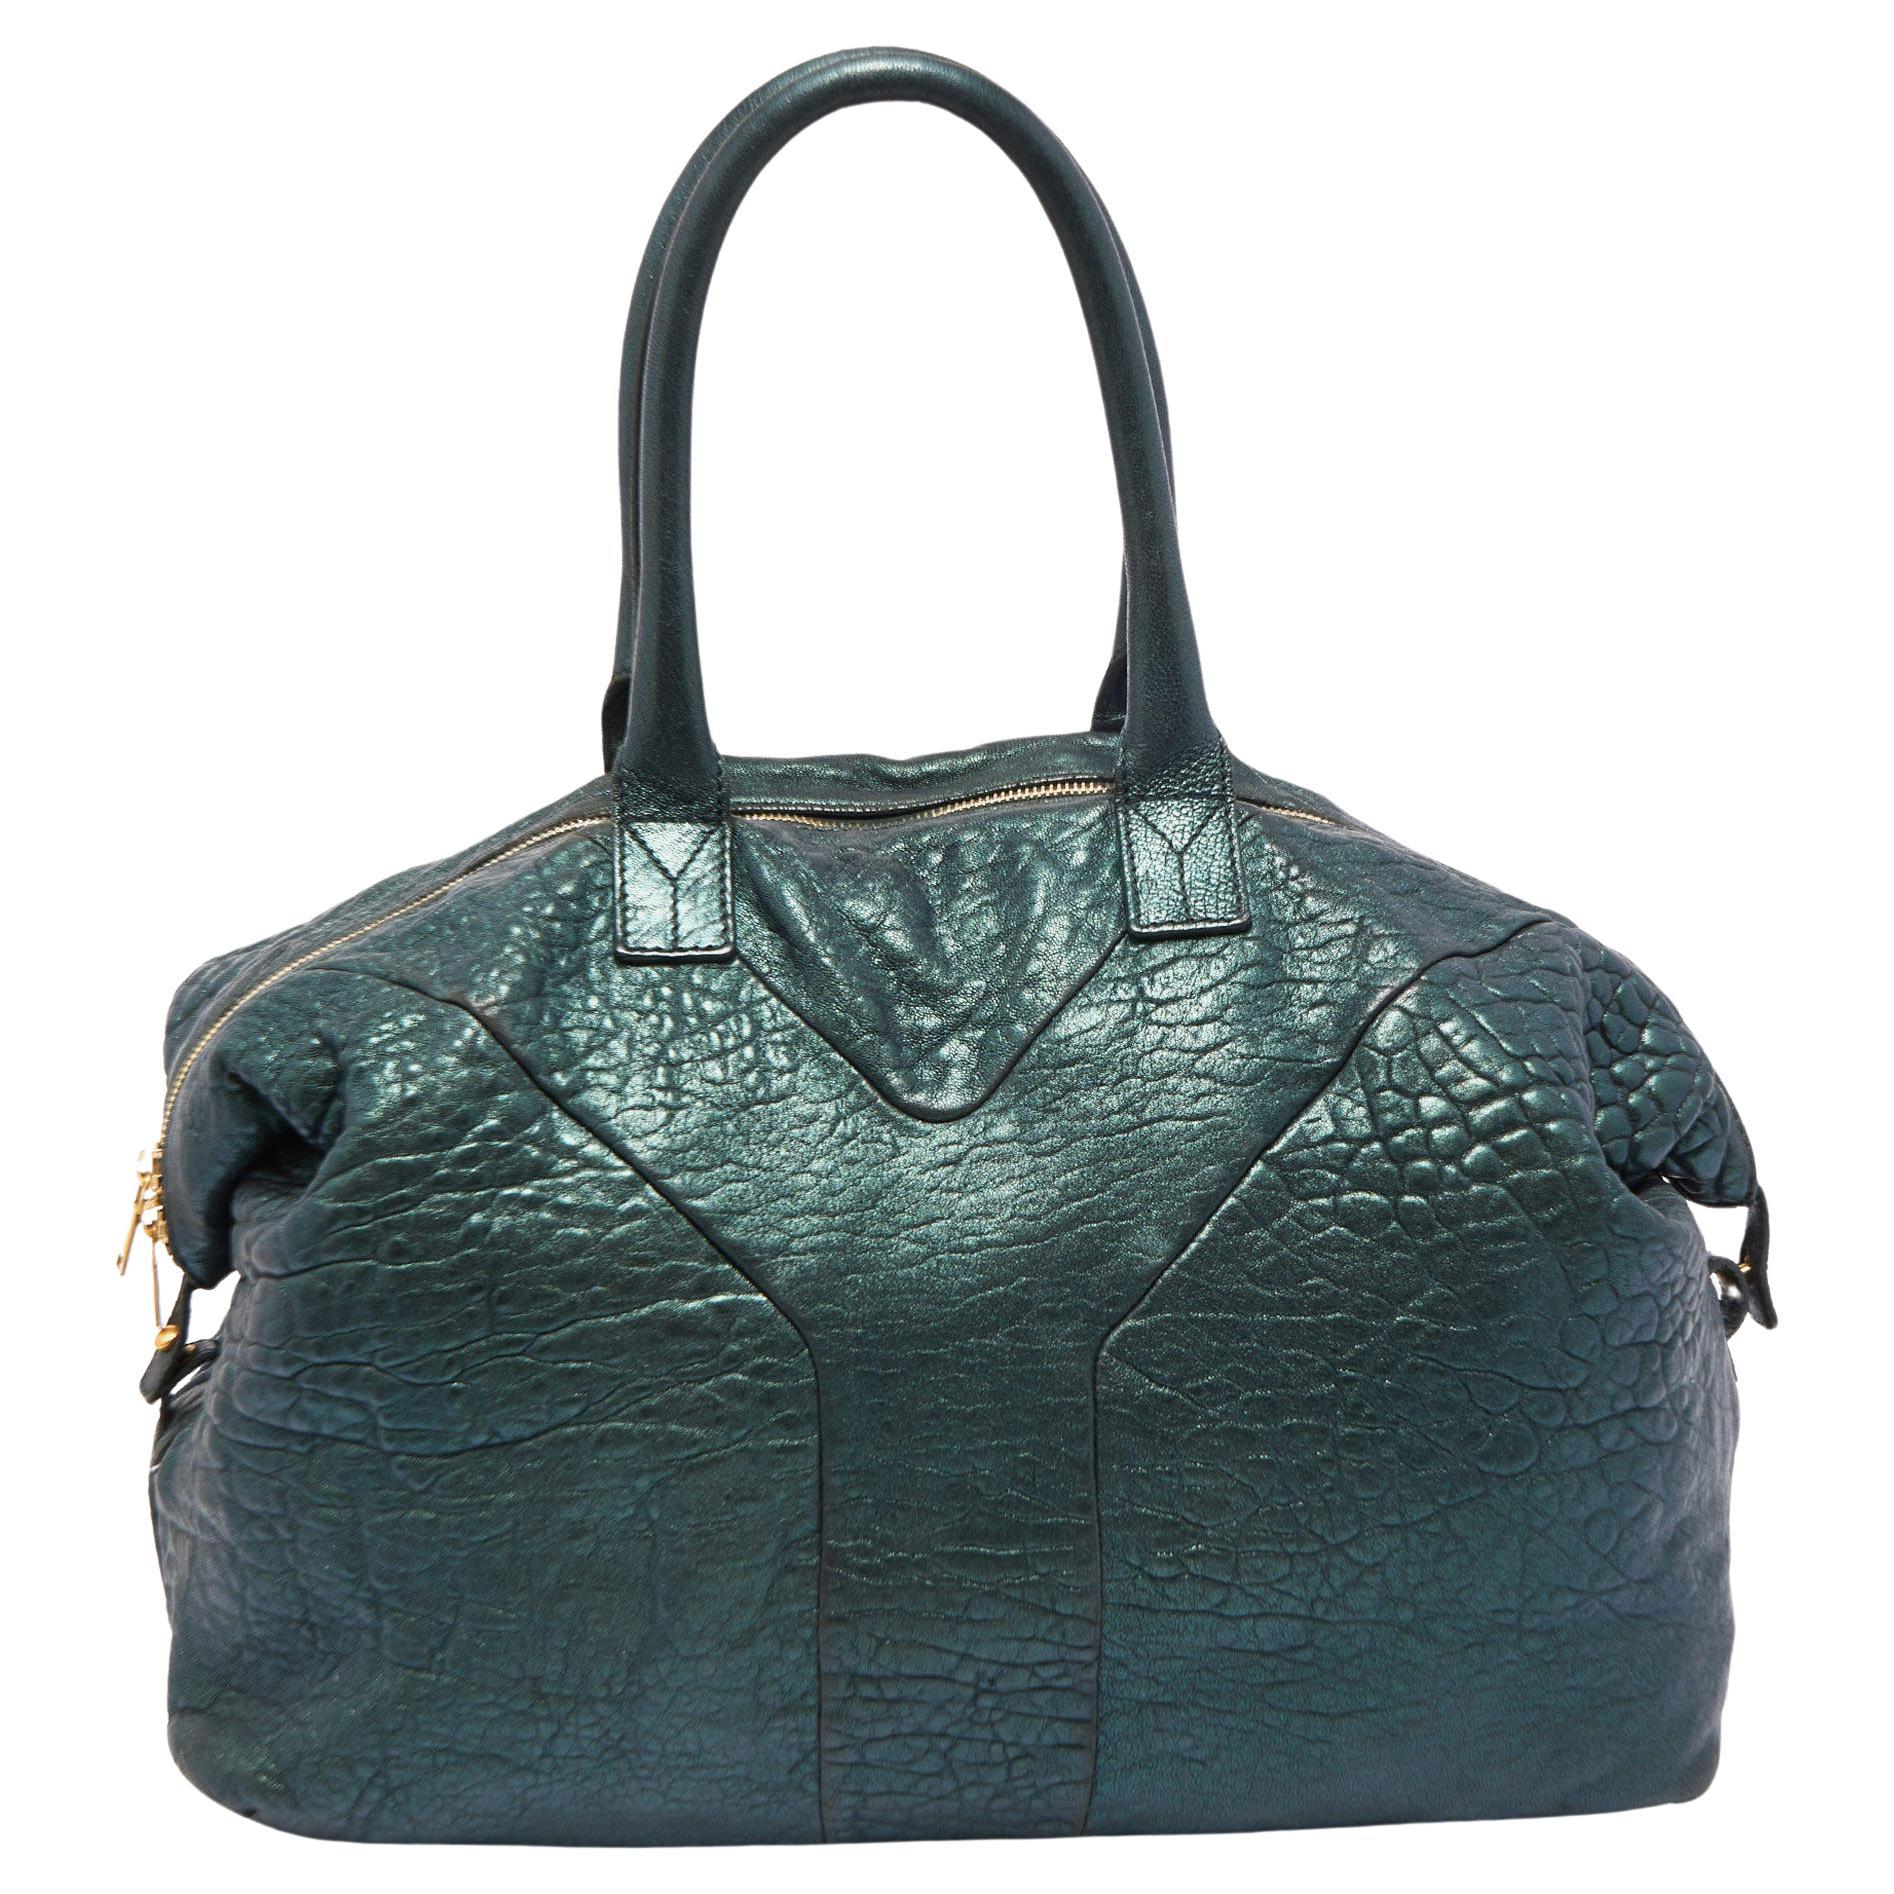 Yves Saint Laurent Metallic Green Leather Medium Easy Y Bag